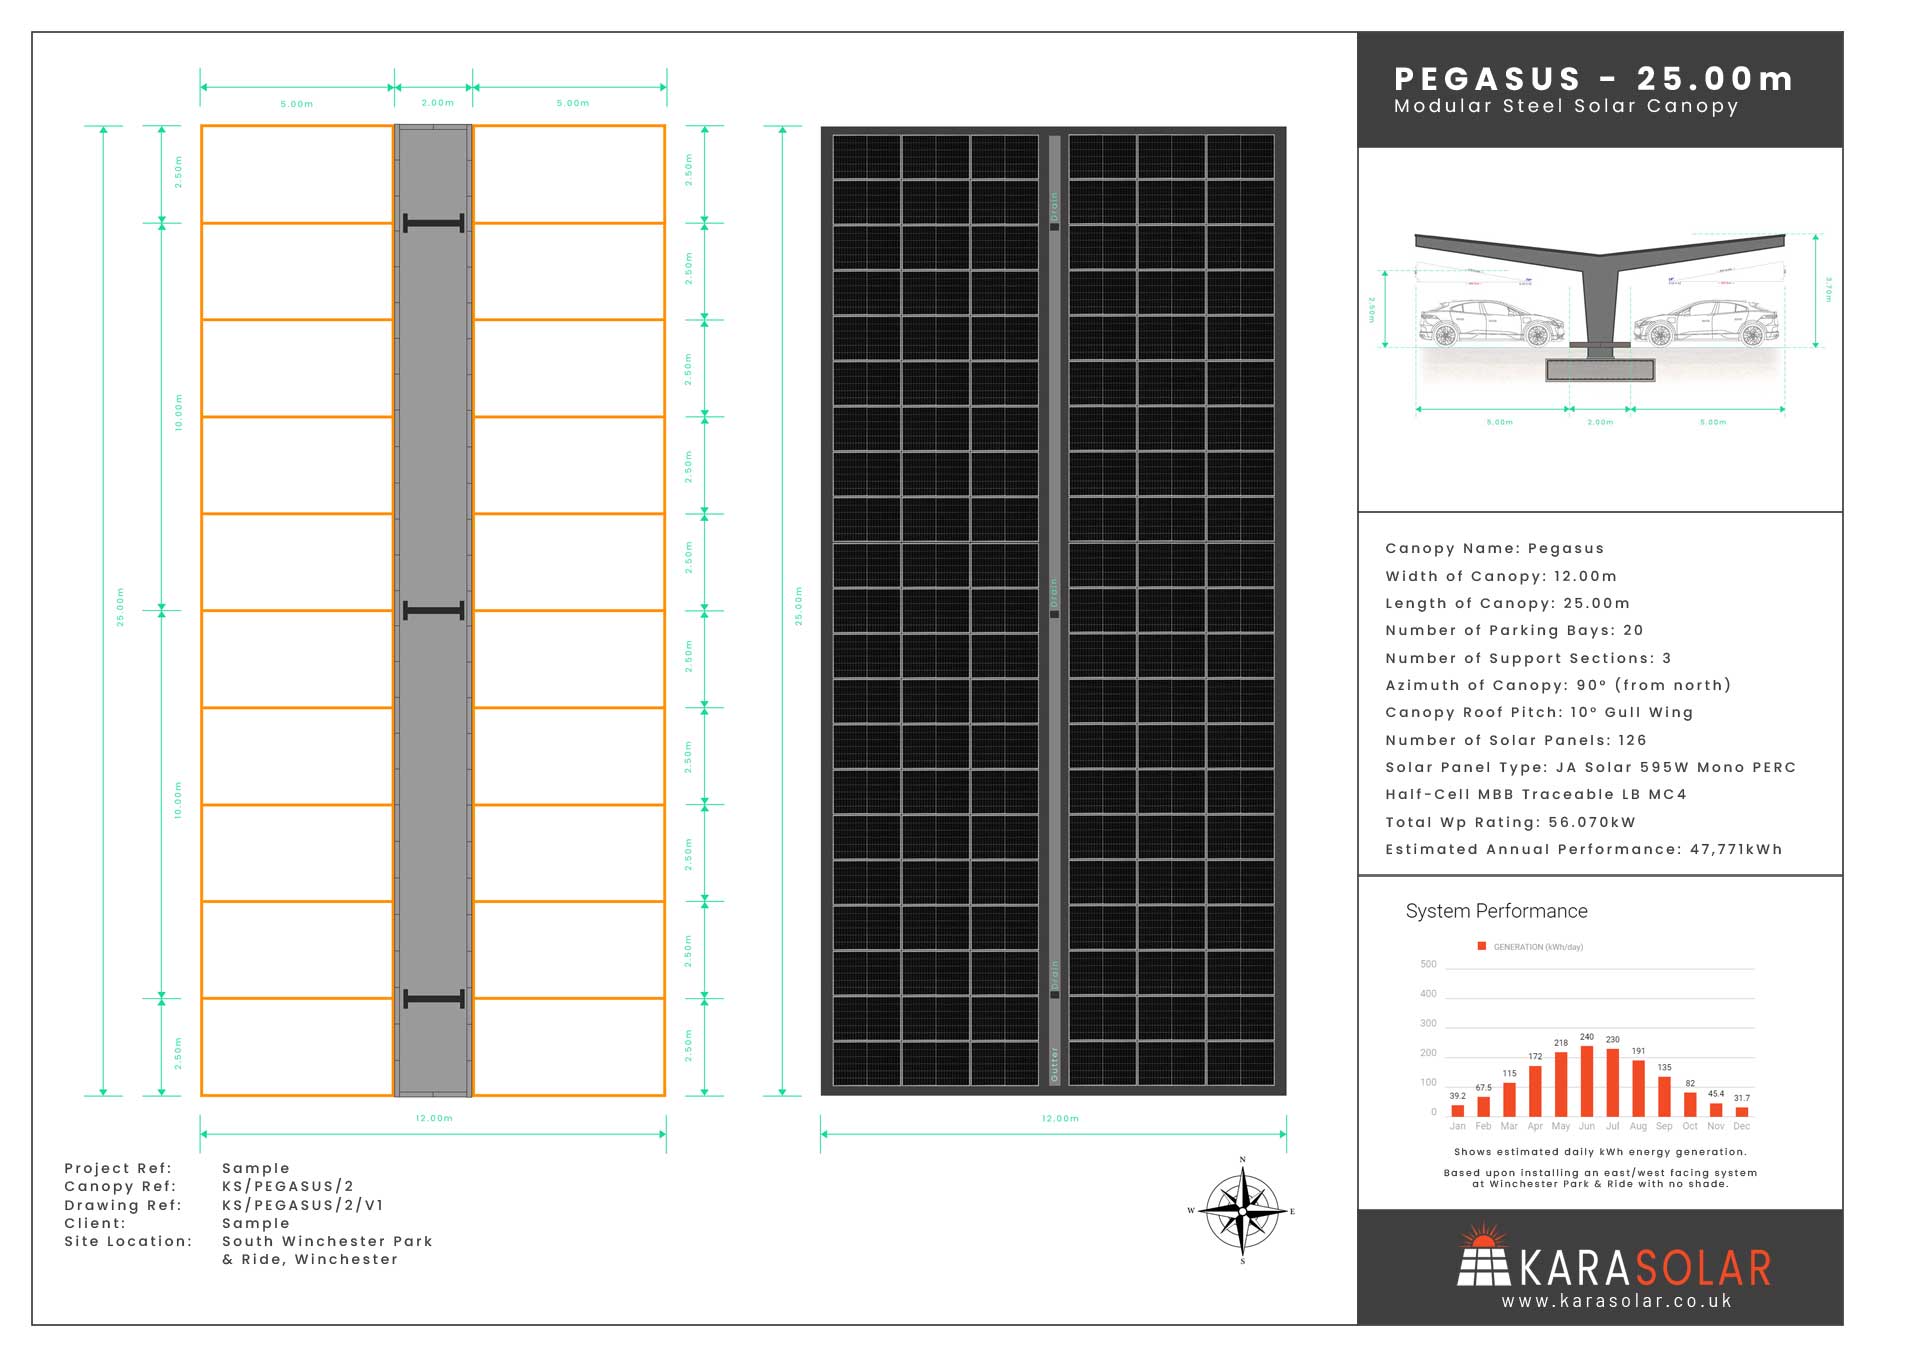 Pegasus-Solar-Canopy-Datasheet-Sample-25.00m